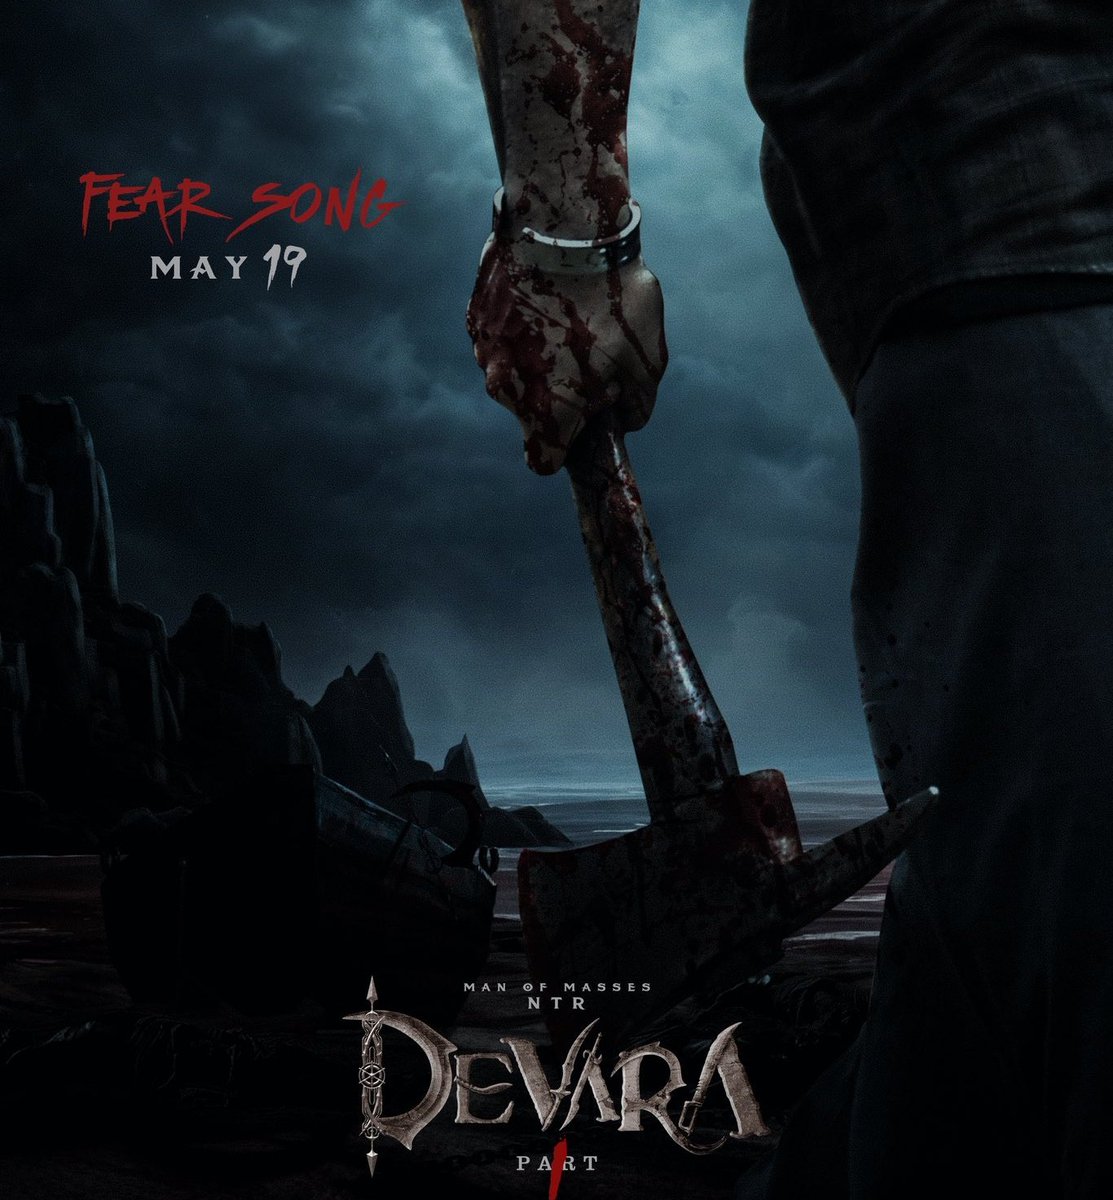 All set to release Devara's first single release on may-19 🔥🔥 #devarafirstsingle #devaramovie #ntr #jrntr #anirudh #song #jhannvikapoor